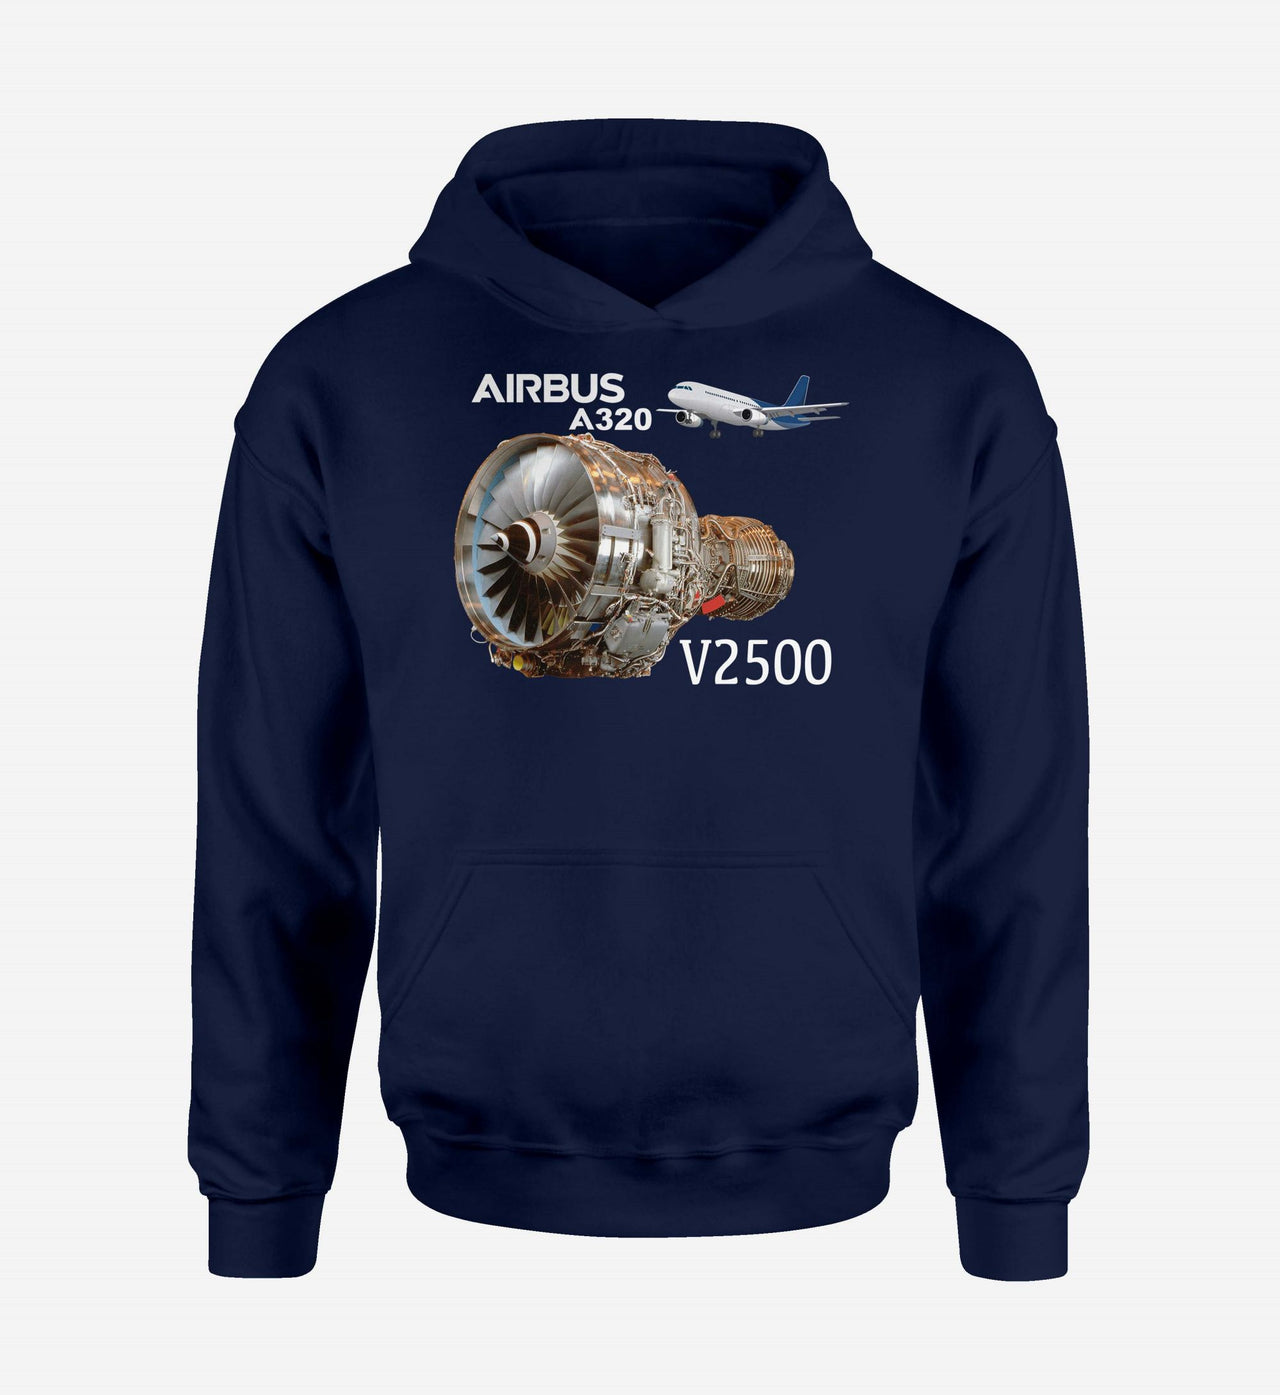 Airbus A320 & V2500 Engine Designed Hoodies